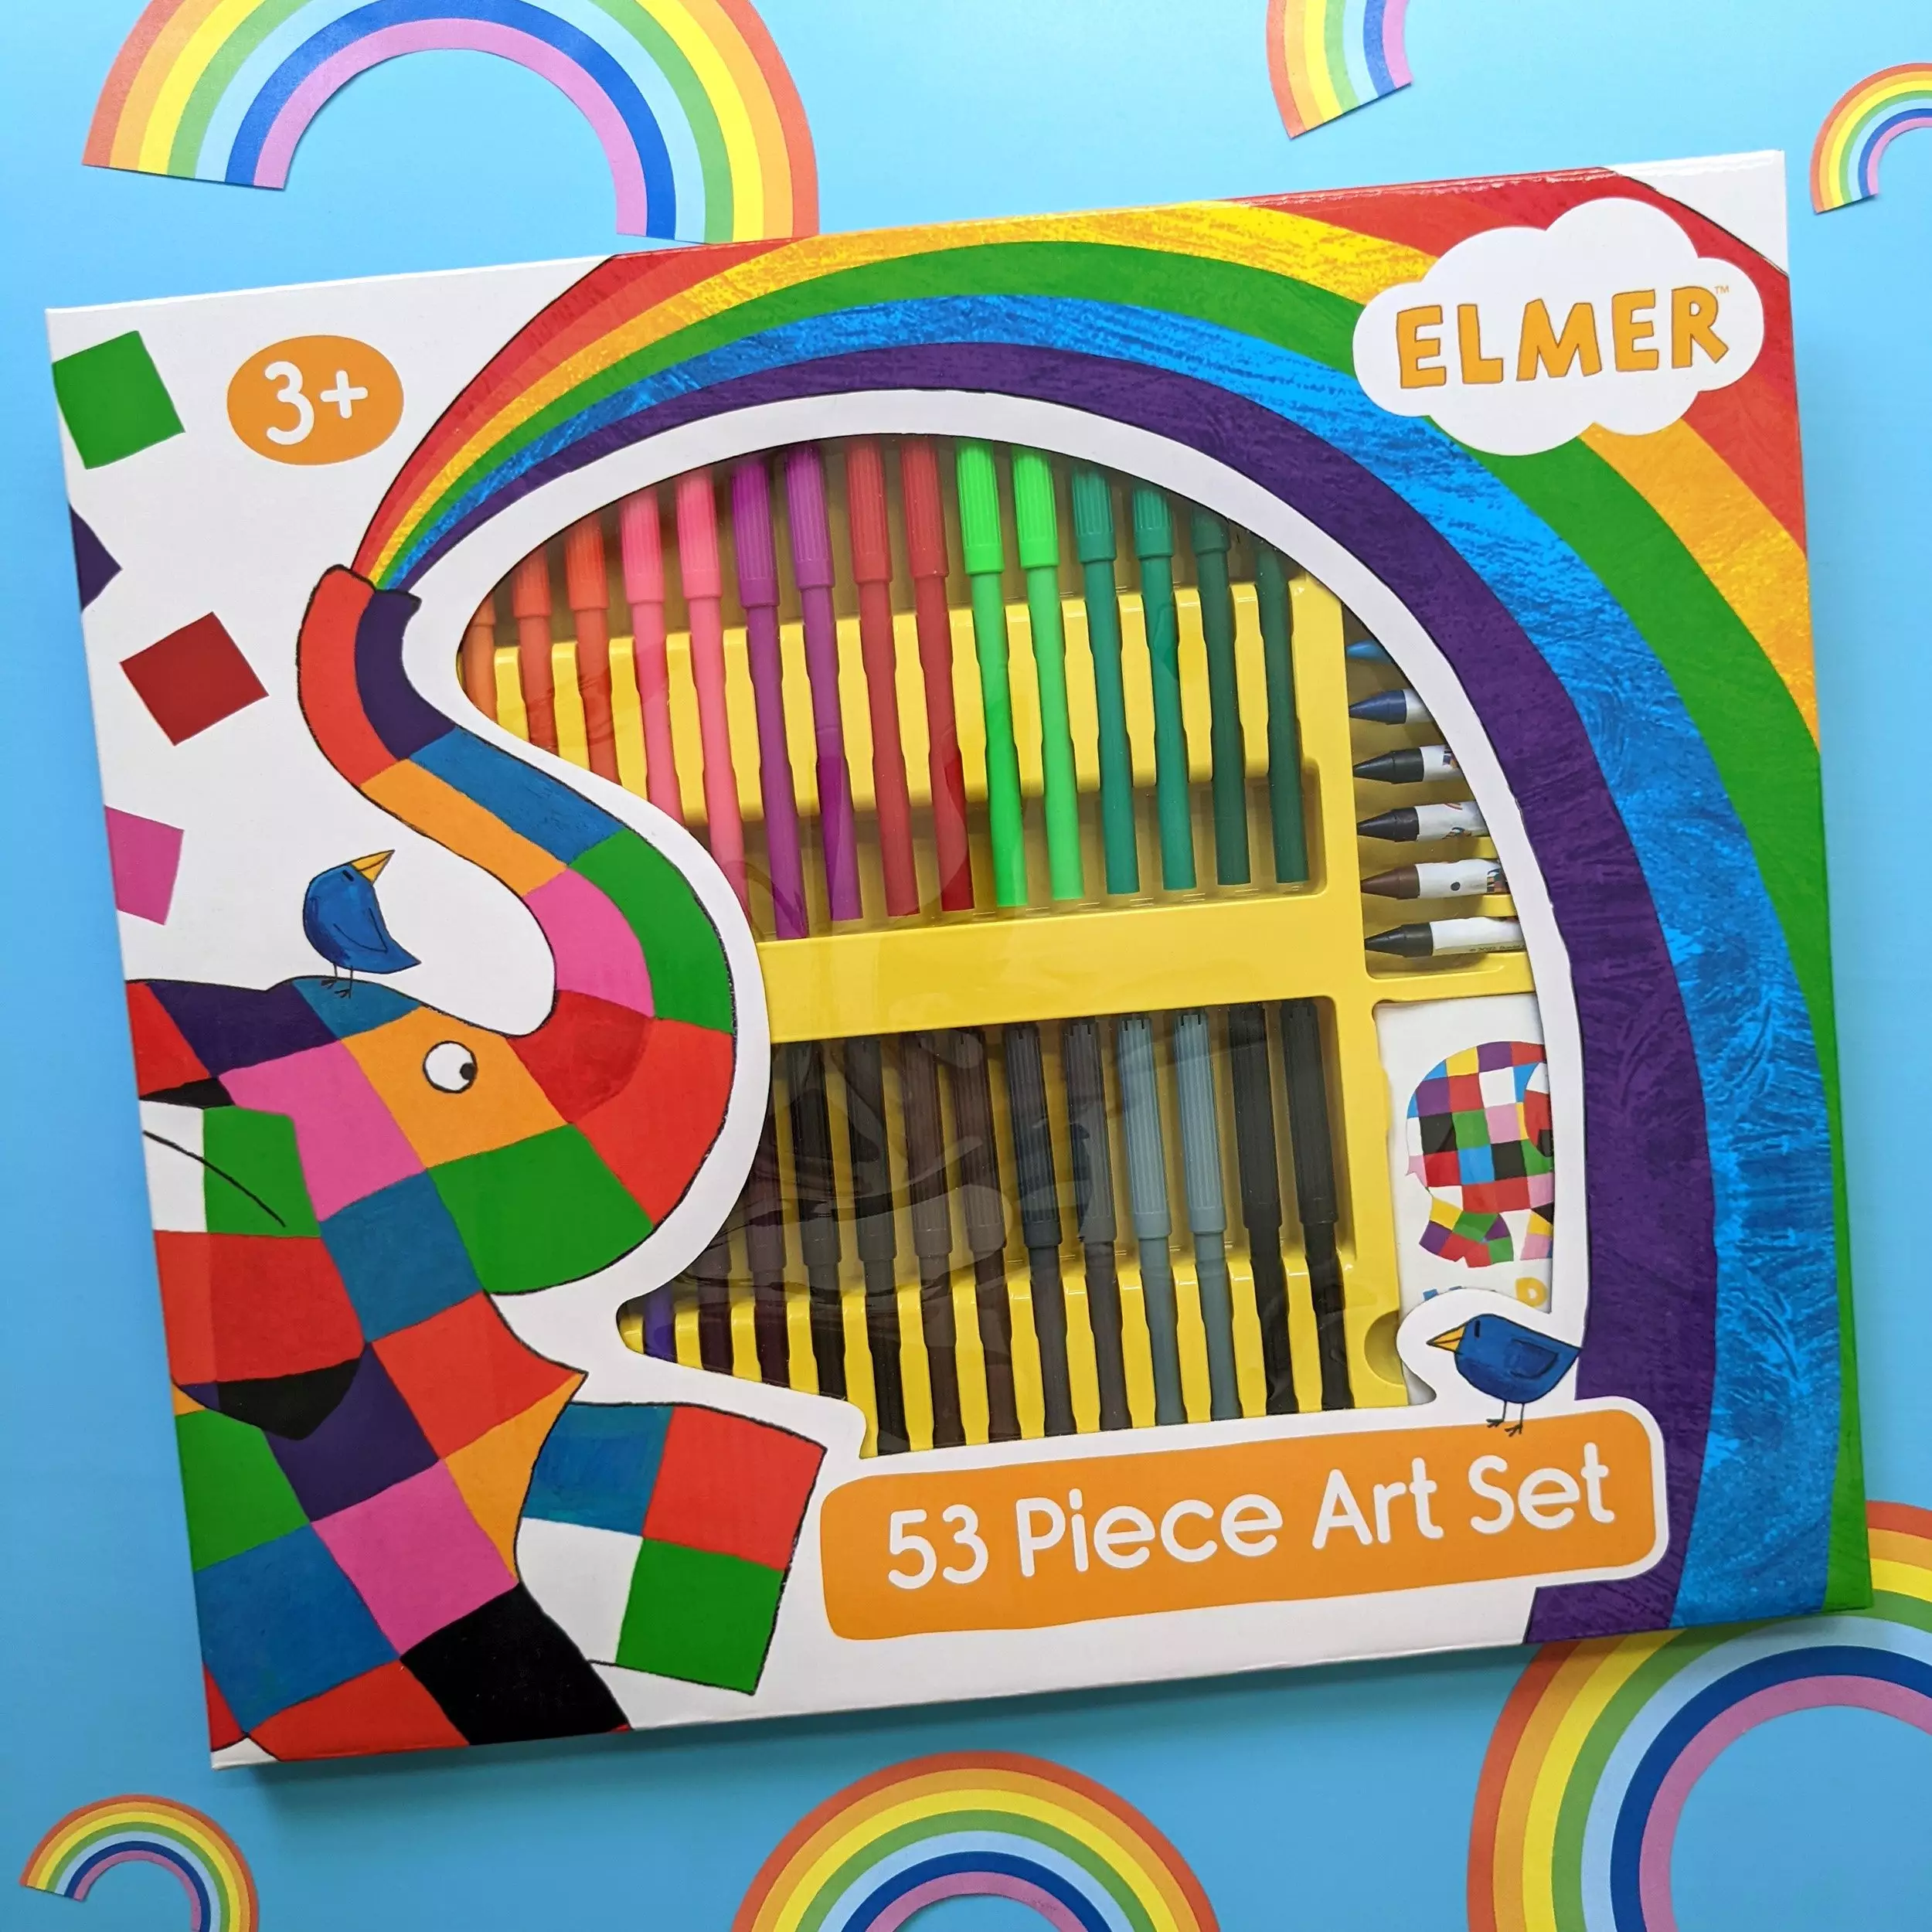 Giant 53 Piece Art Set - Elmer